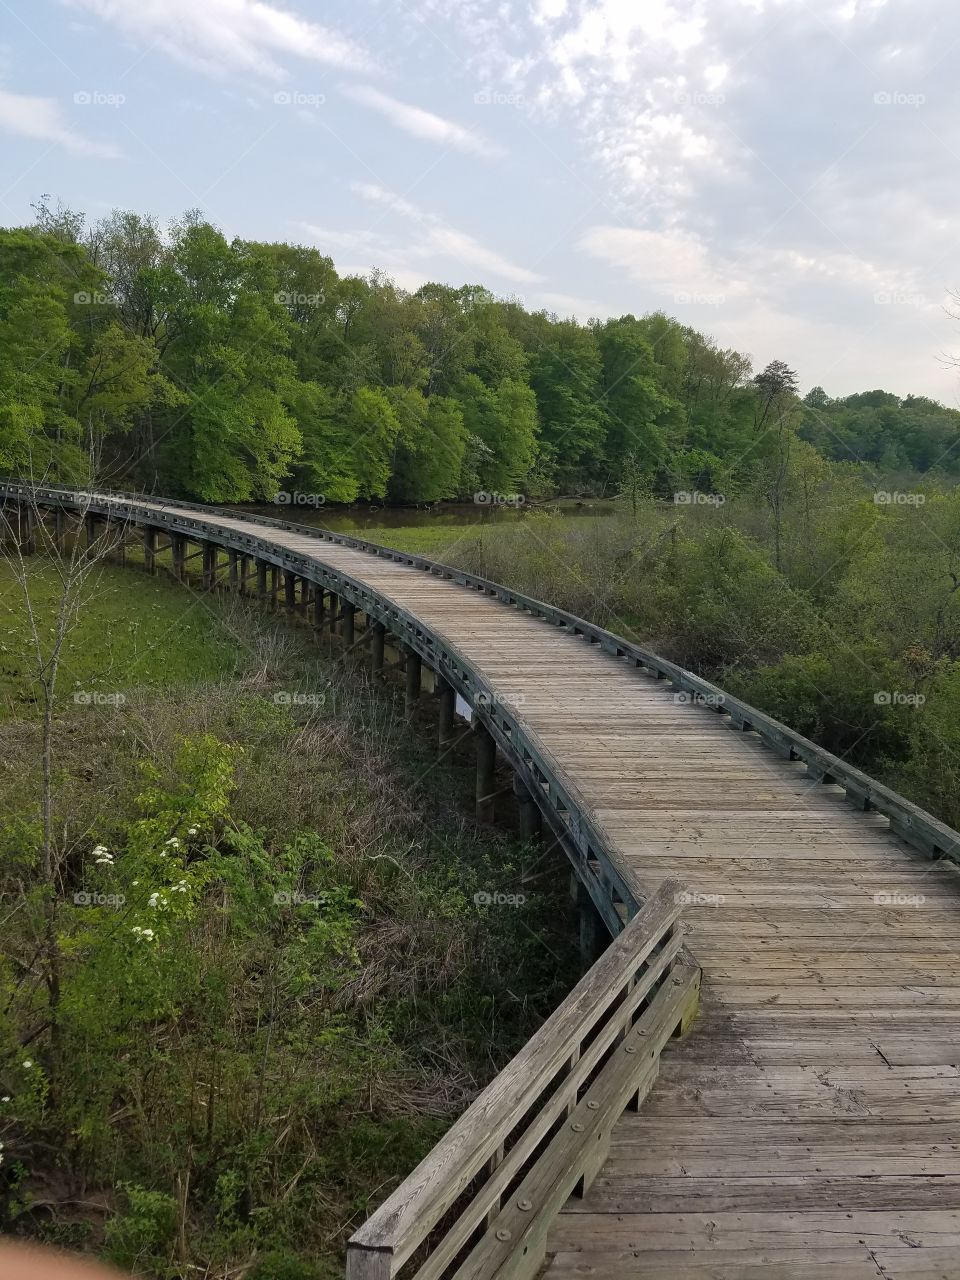 a bridge in a Maryland wildlife sanctuary